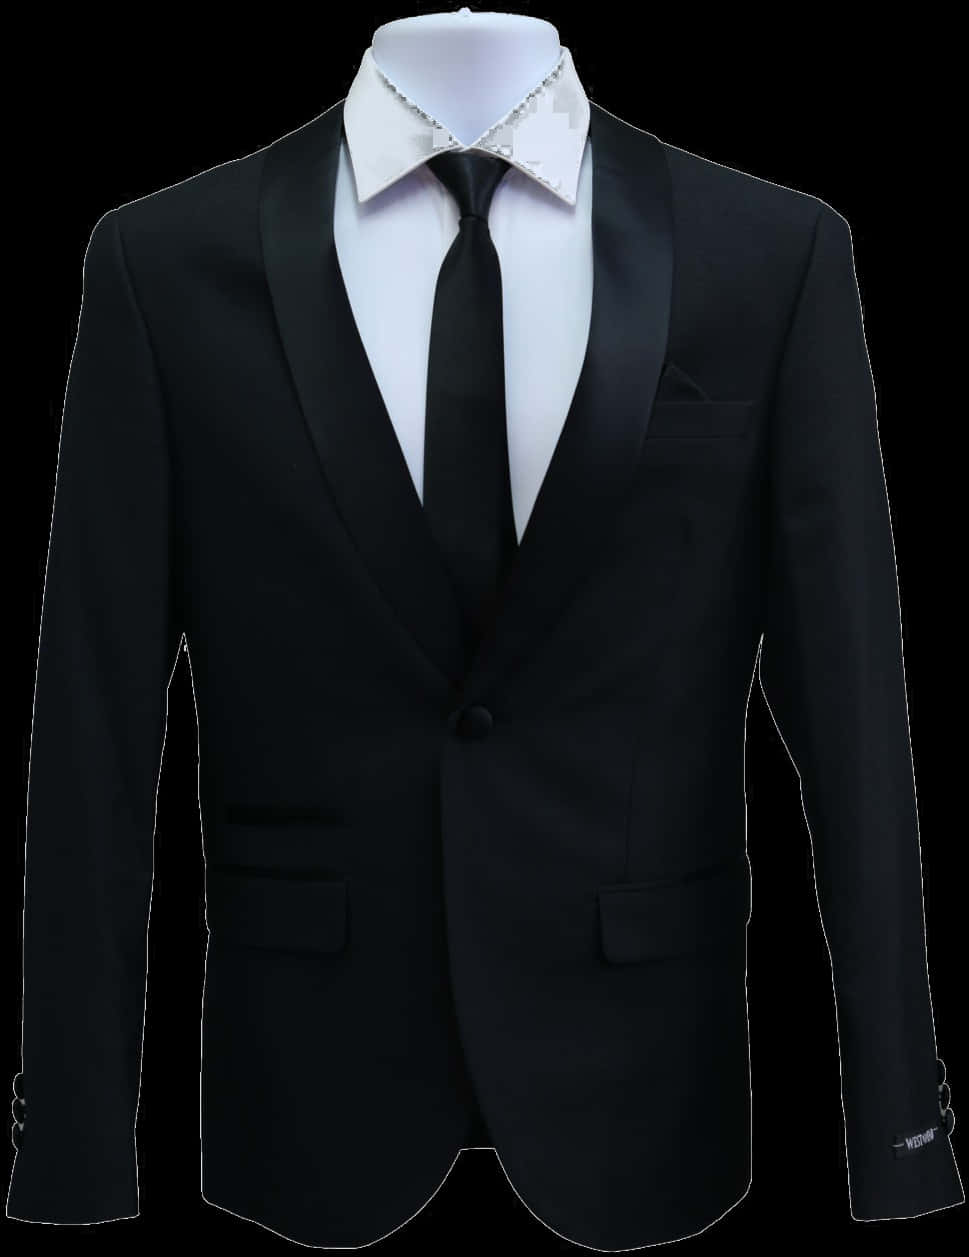 Black Suit Jacketwith Tie PNG